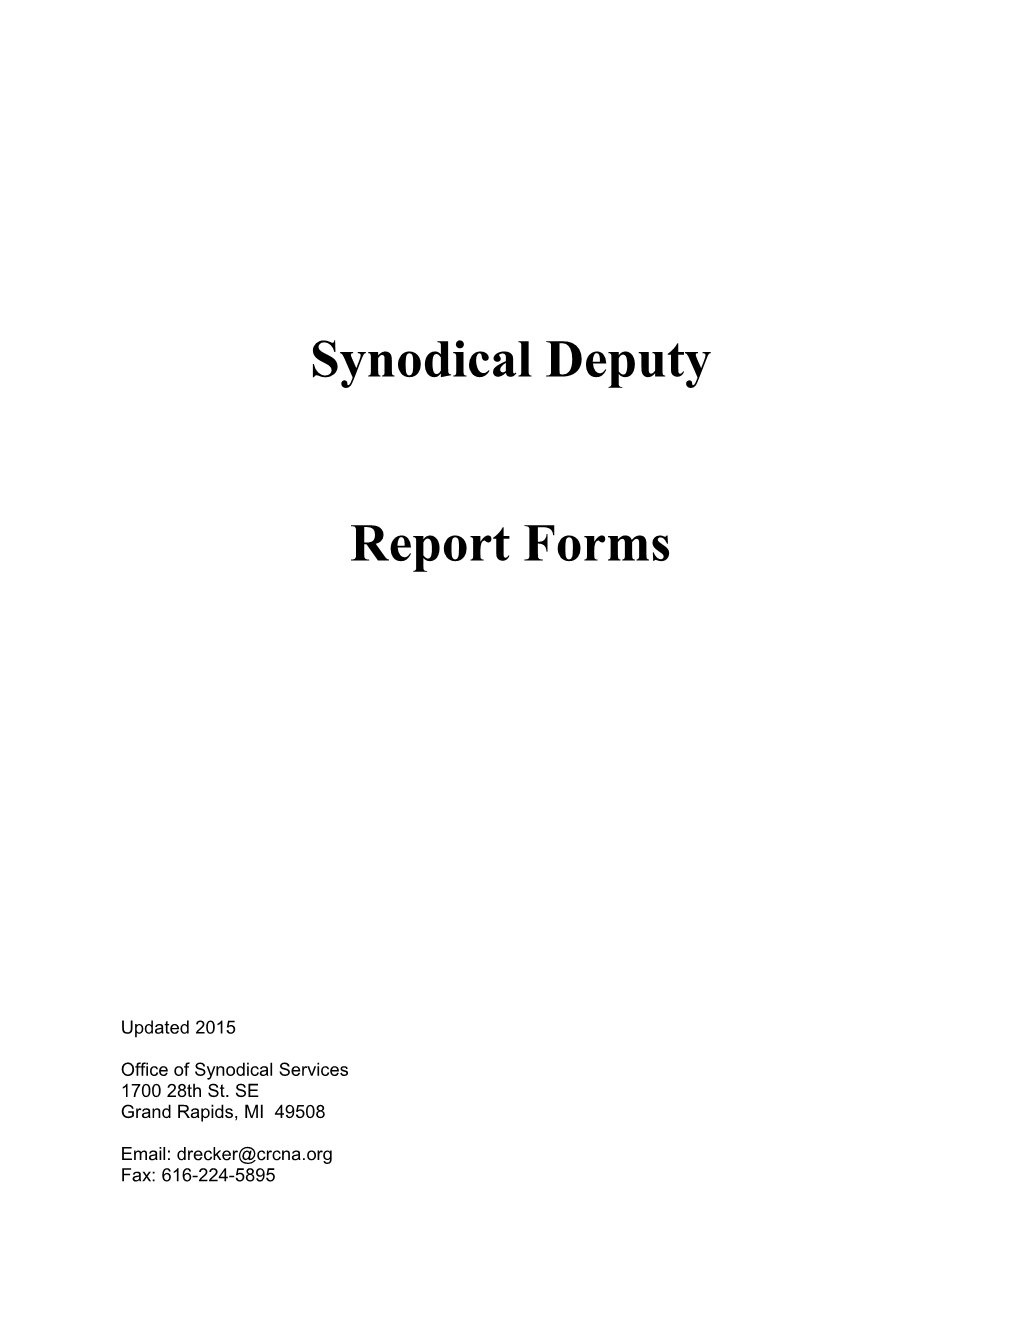 Manual for Synodical Deputies